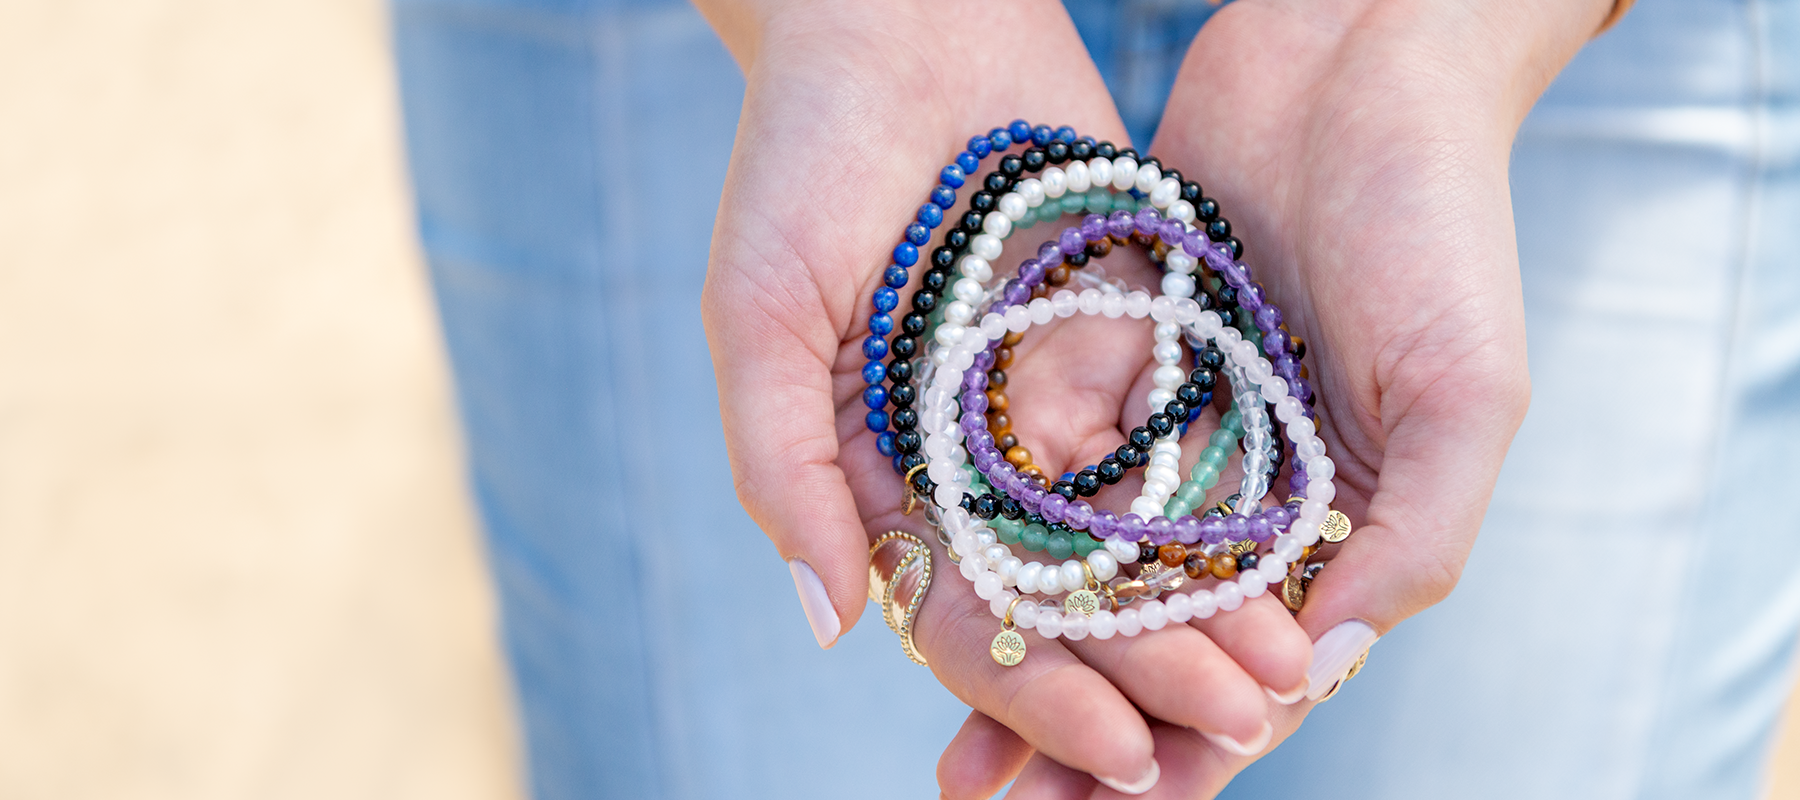 Healing gem bracelets